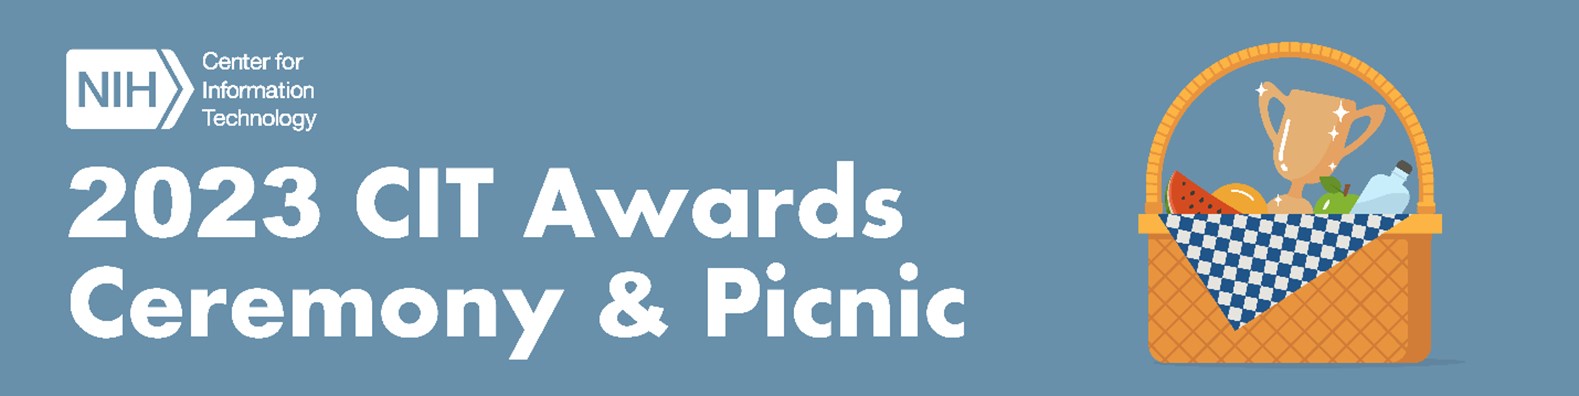 2023 CIT Awards Ceremony & Picnic